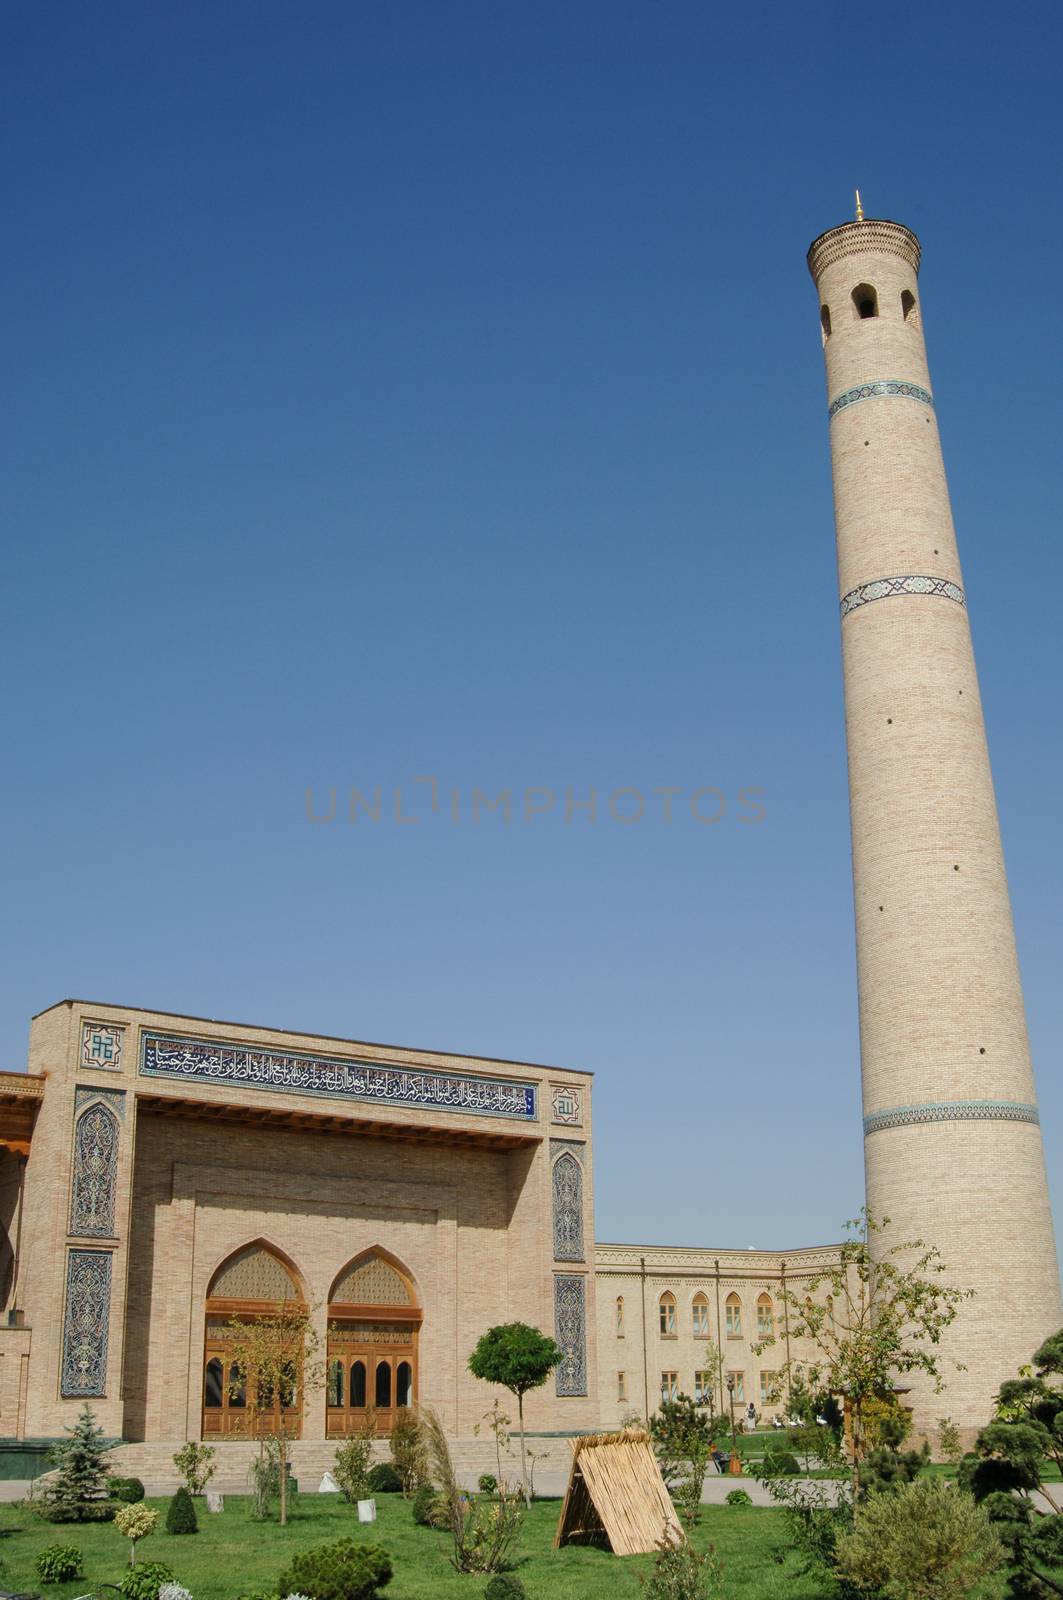 External review of restored architecture of ancient buildings in Tashkent, Uzbekistan